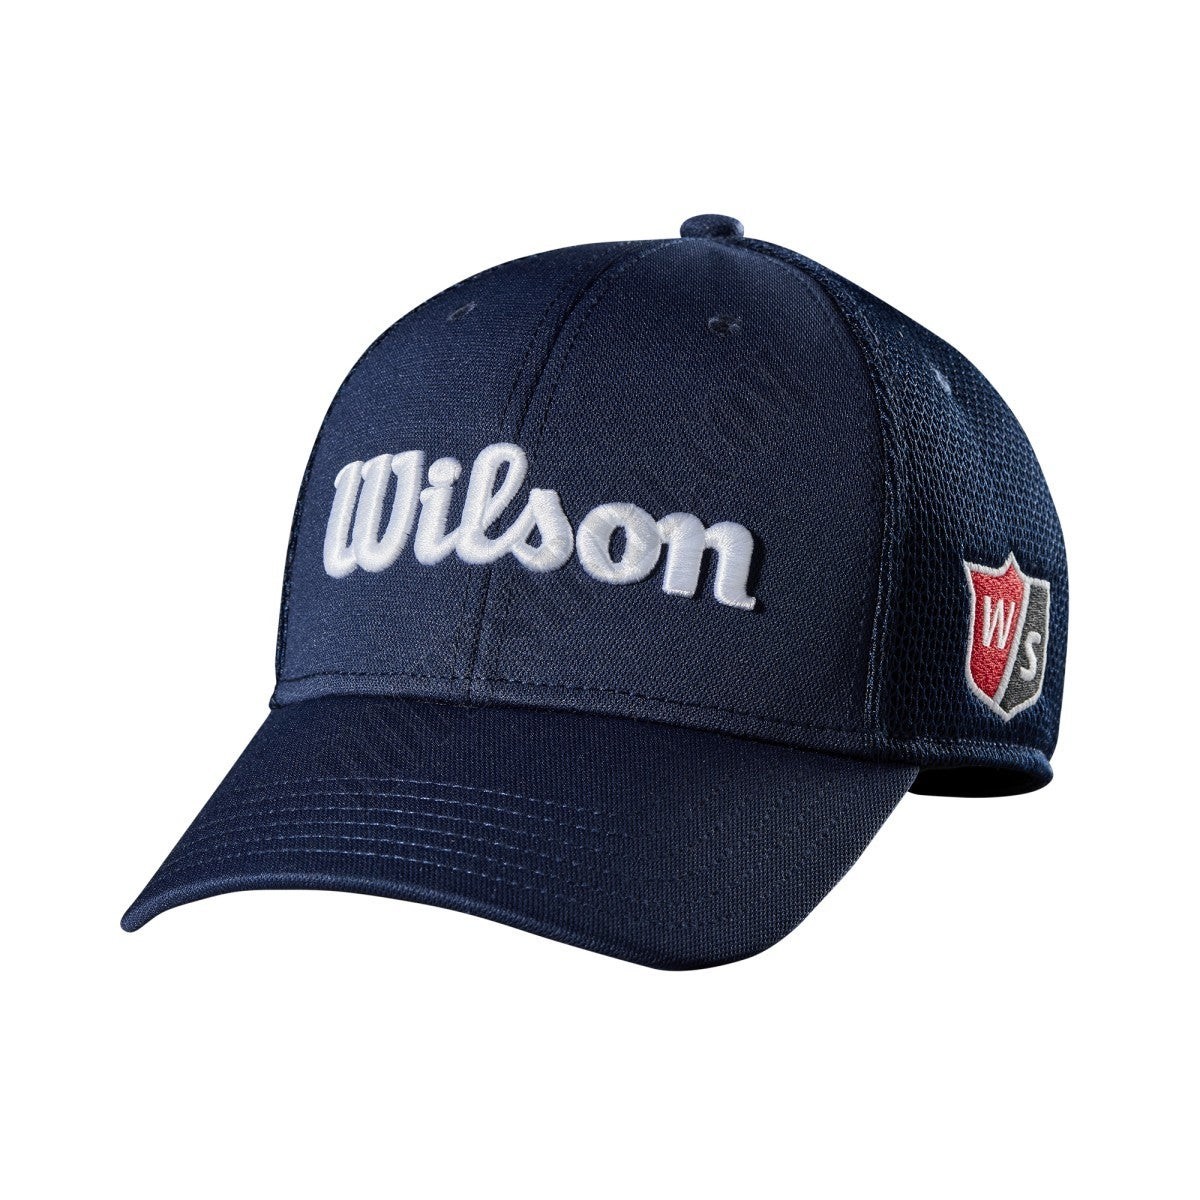 Wilson Tour Mesh Hat - Wilson Discount Store - -0